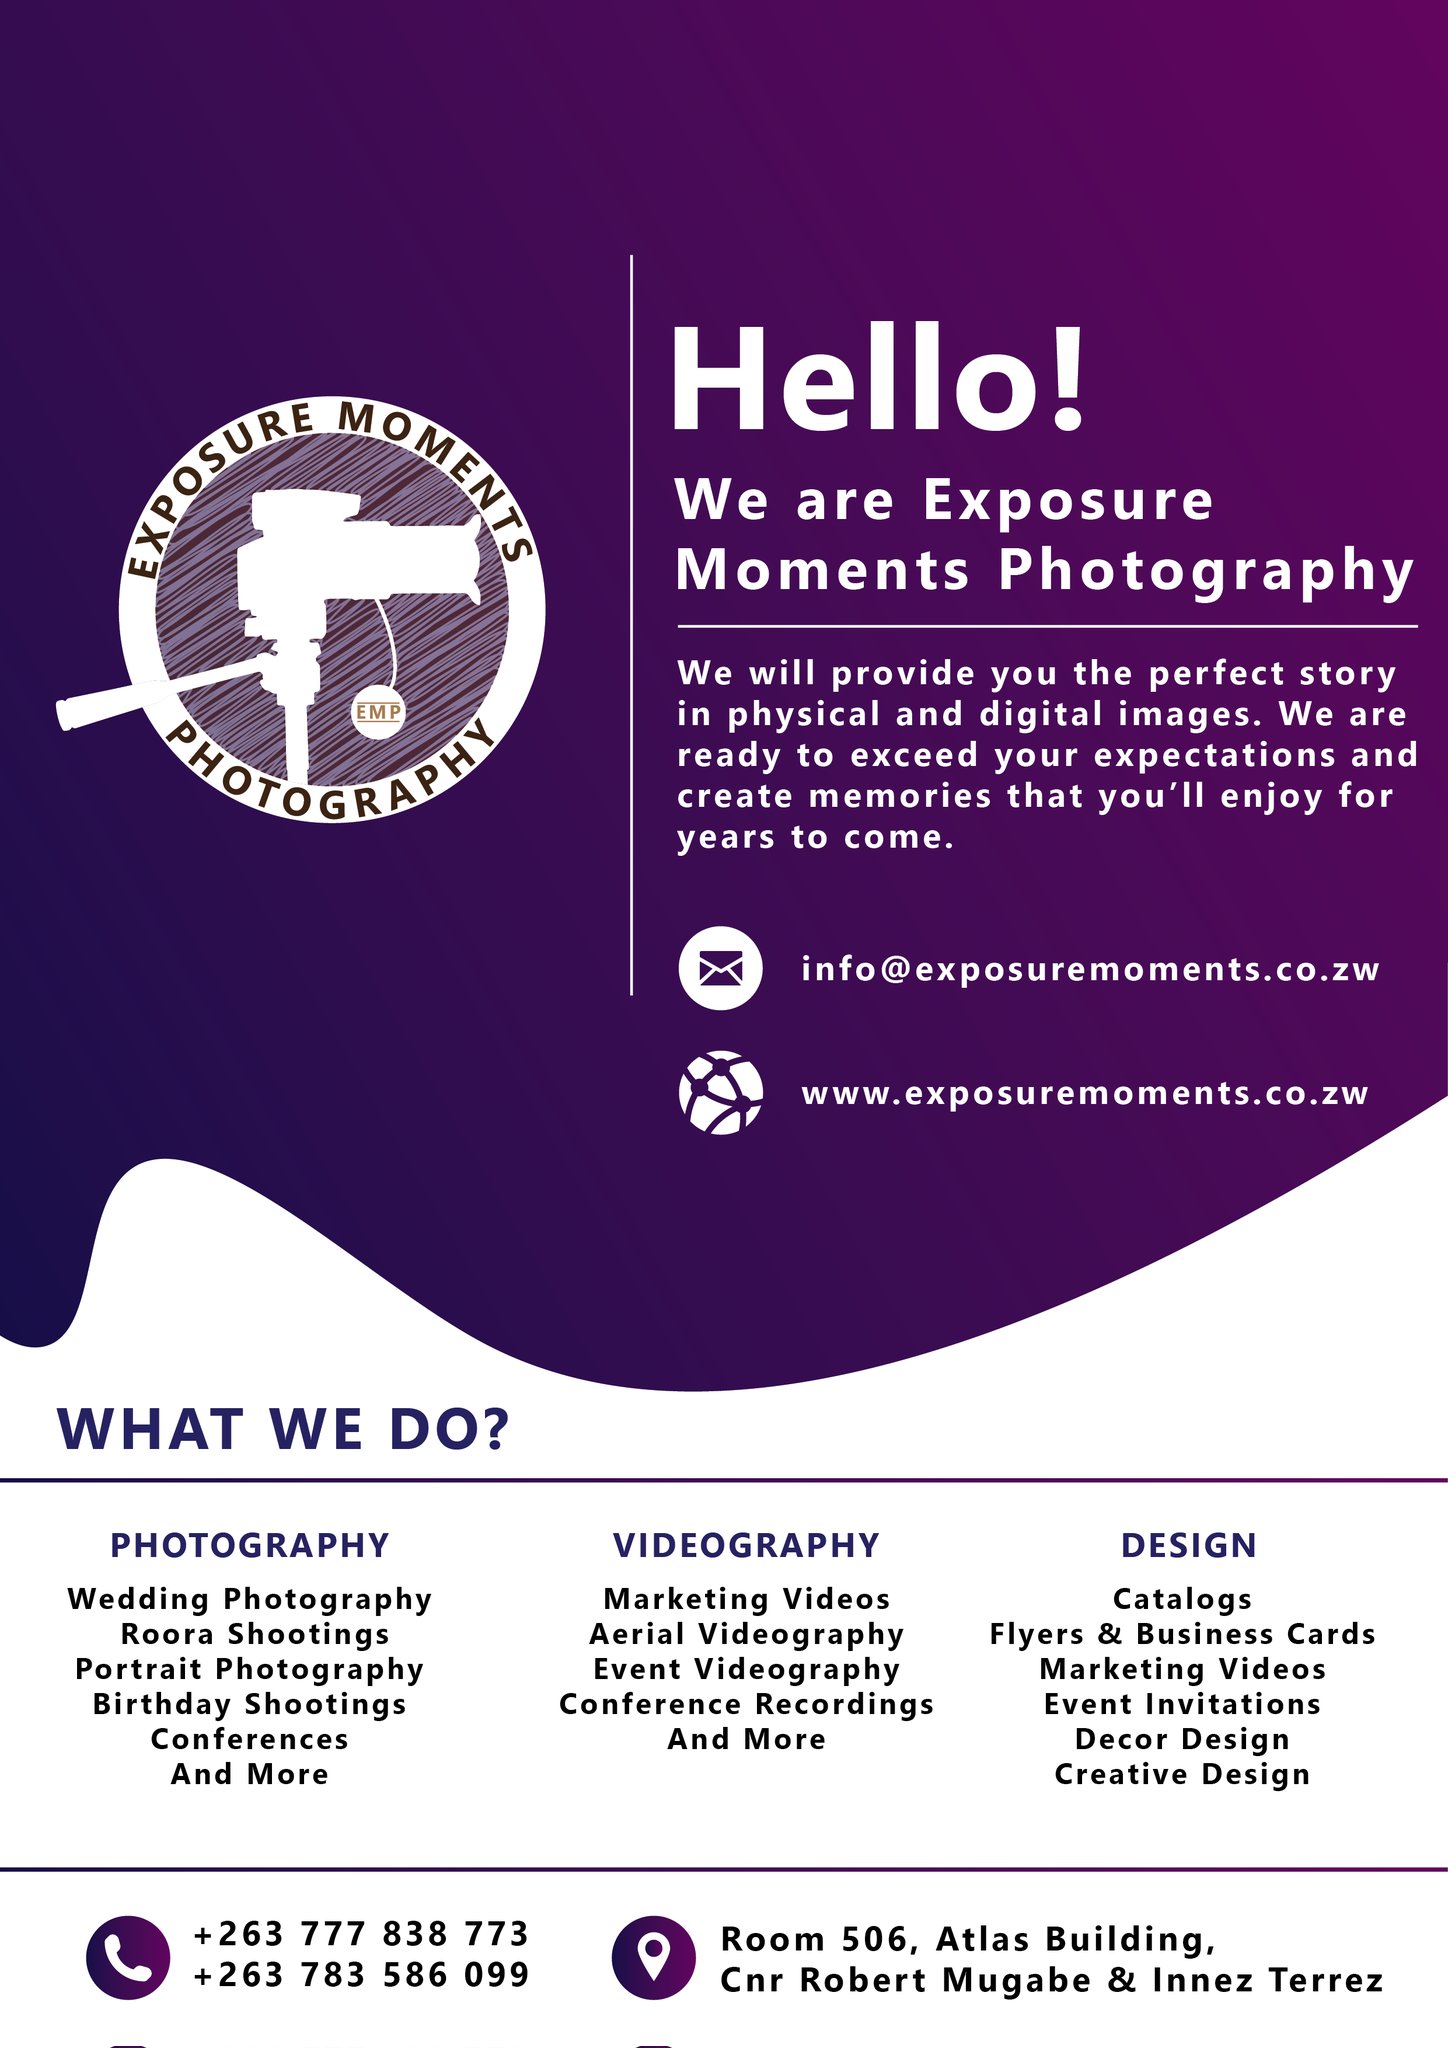 EM Memories - logo for new event photography & video business